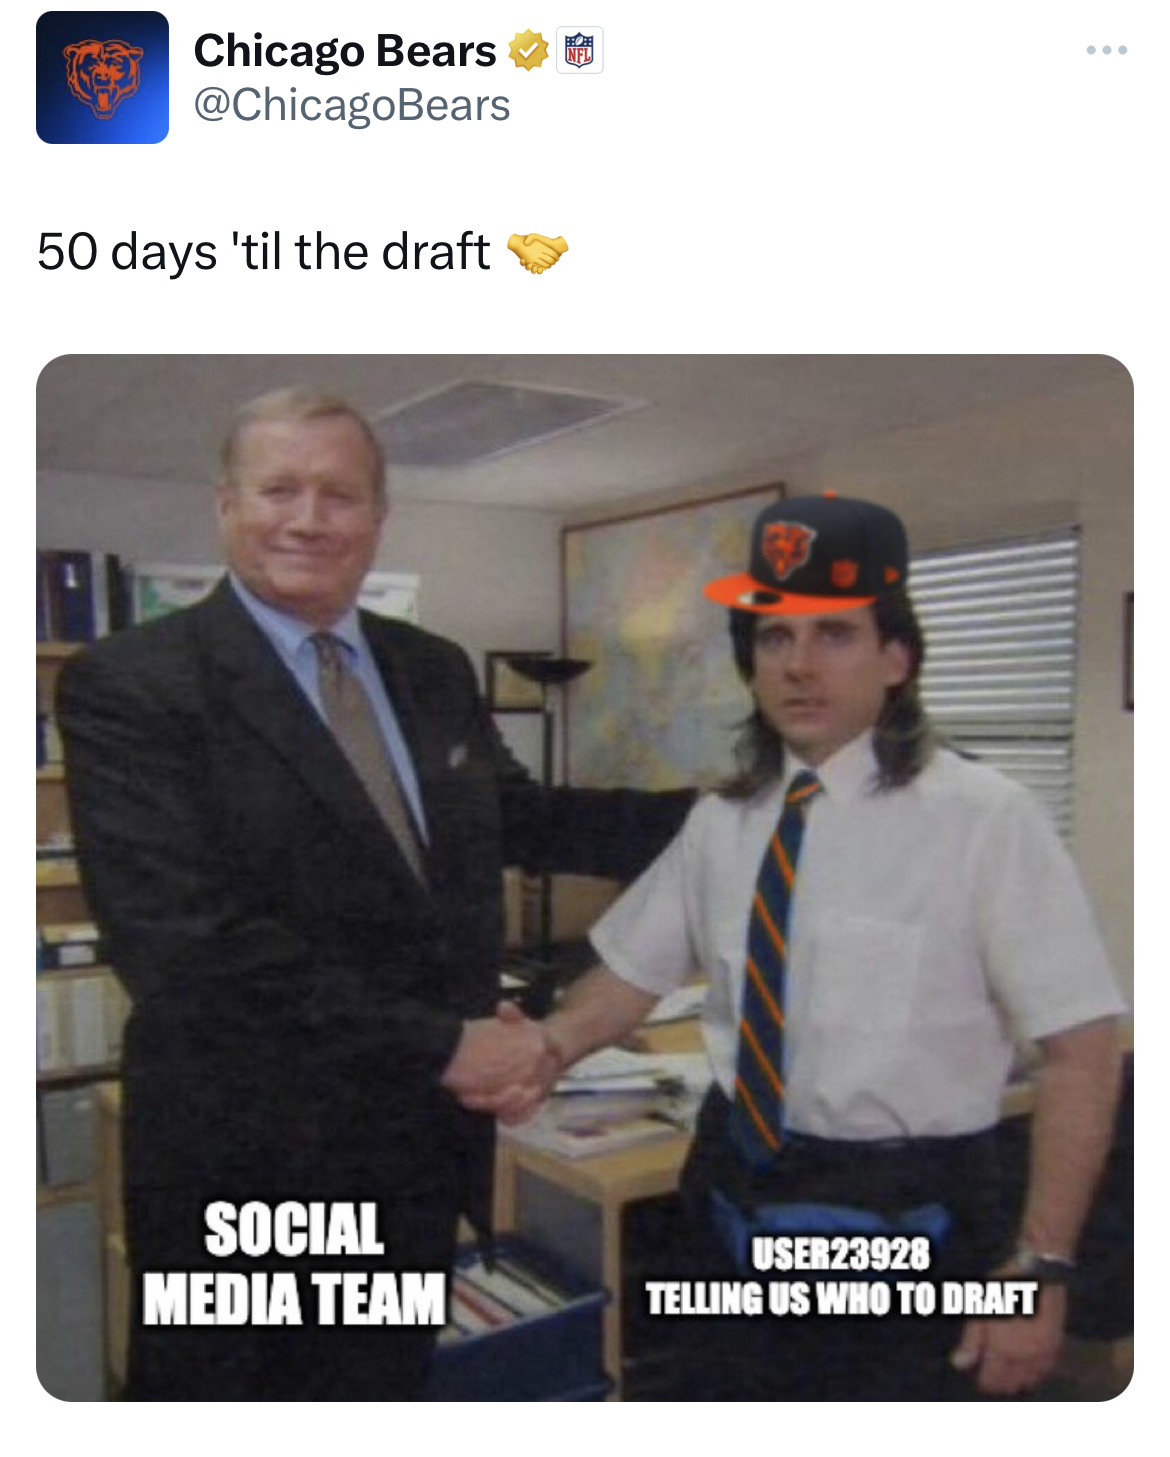 funny tweets - michael scott ed truck - Chicago Bears Bears 50 days 'til the draft Social Media Team USER23928 Telling Us Who To Draft